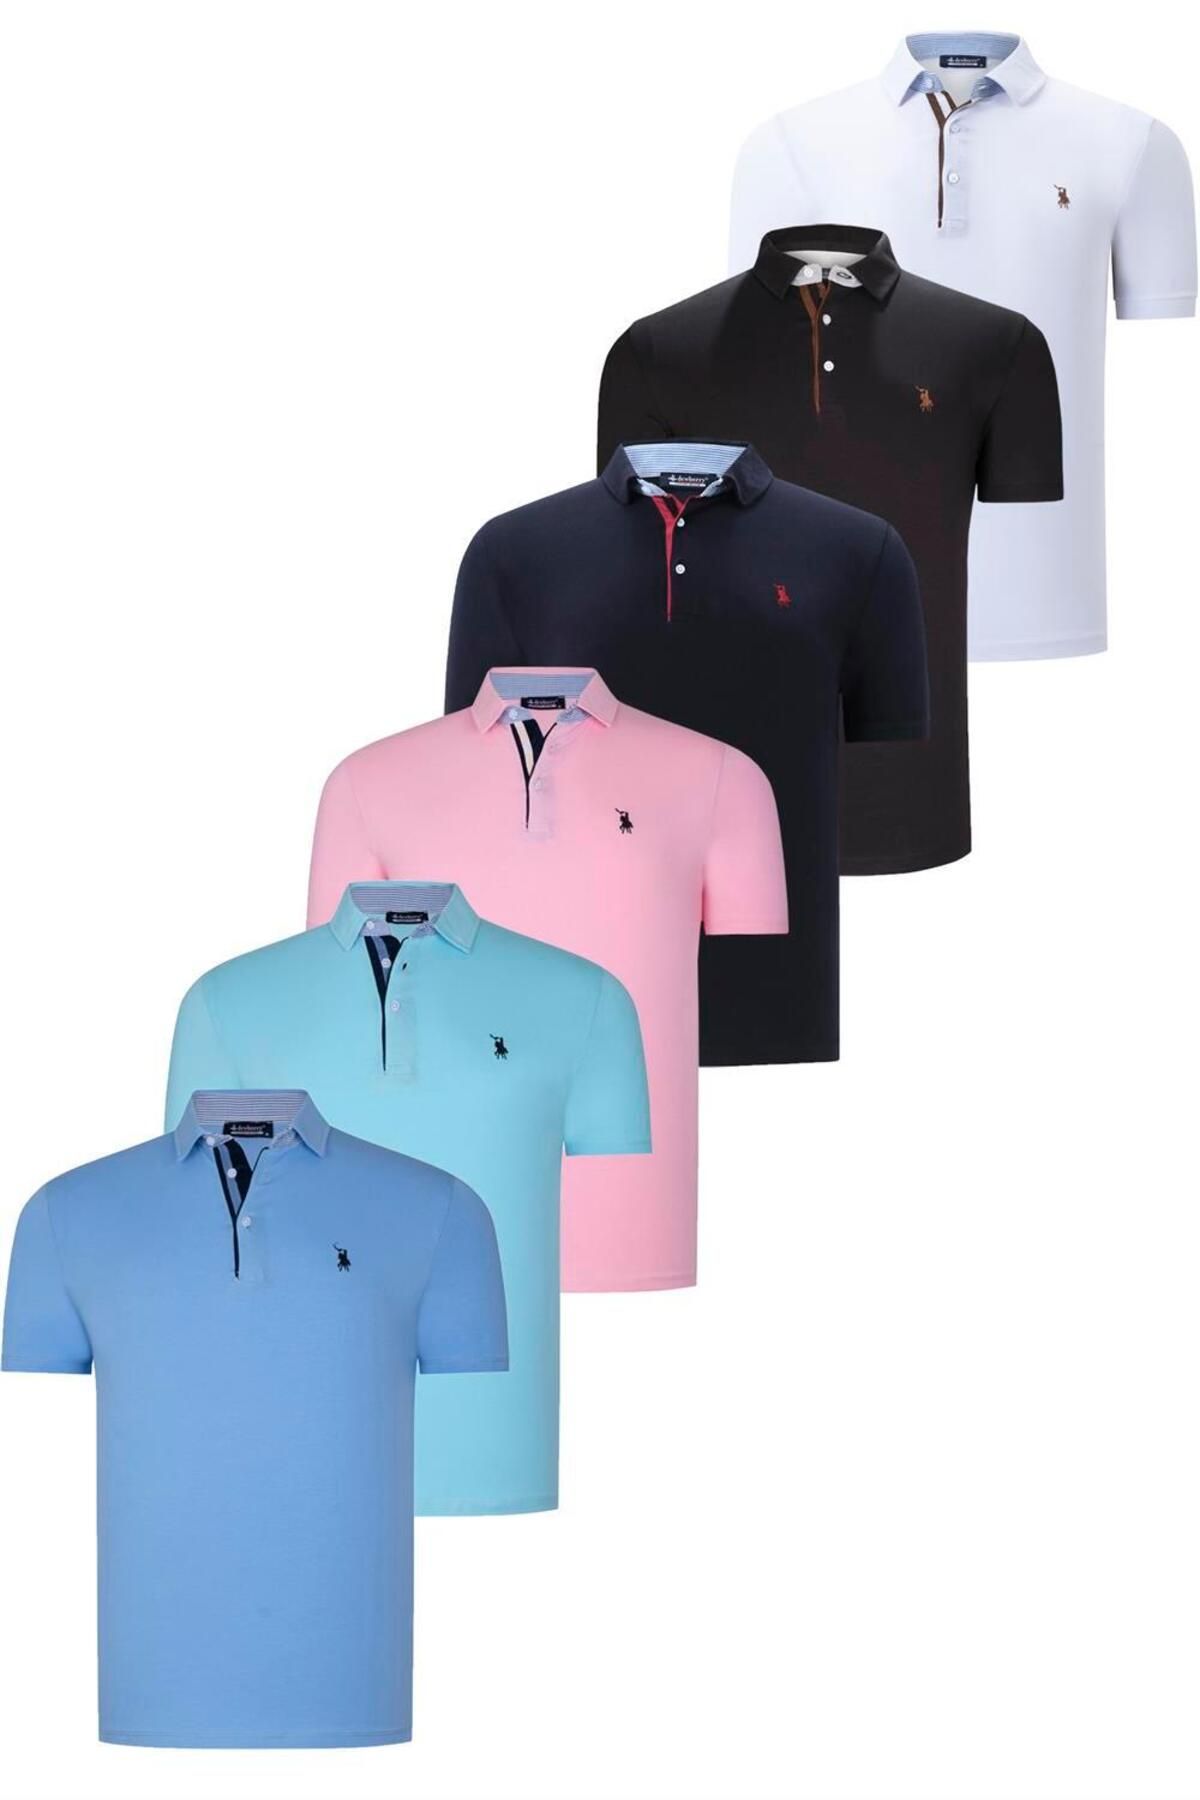 Dewberry ست 6 عددی تی شرت مردانه DEWBERRY T8582-مشکی-سفید-آبی تیره-صورتی-فیروزه ای-آبی روشن